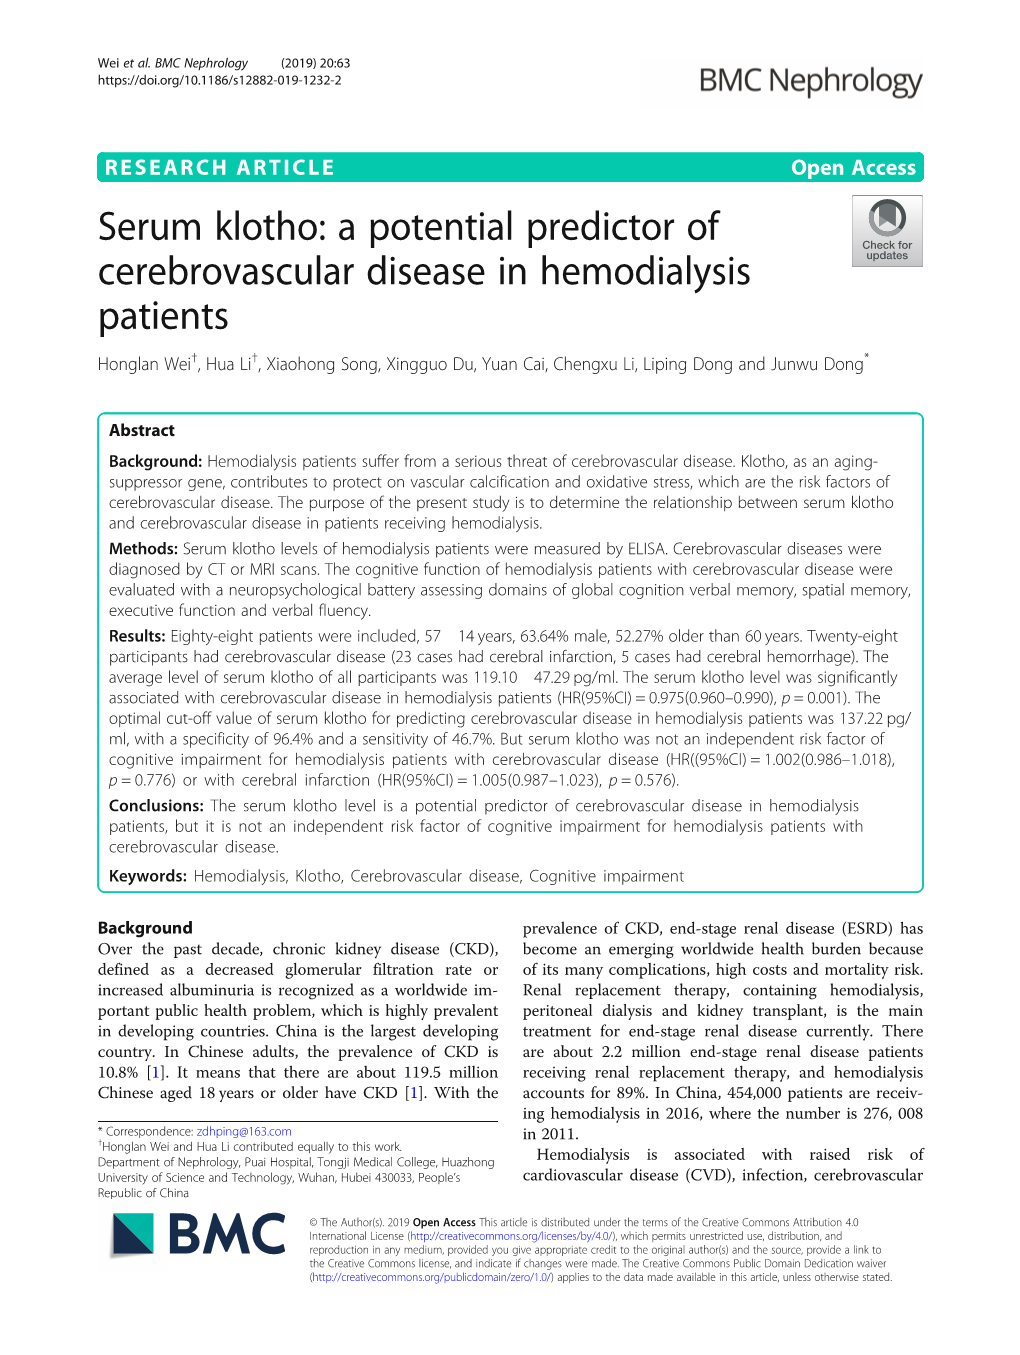 Serum Klotho: a Potential Predictor of Cerebrovascular Disease In